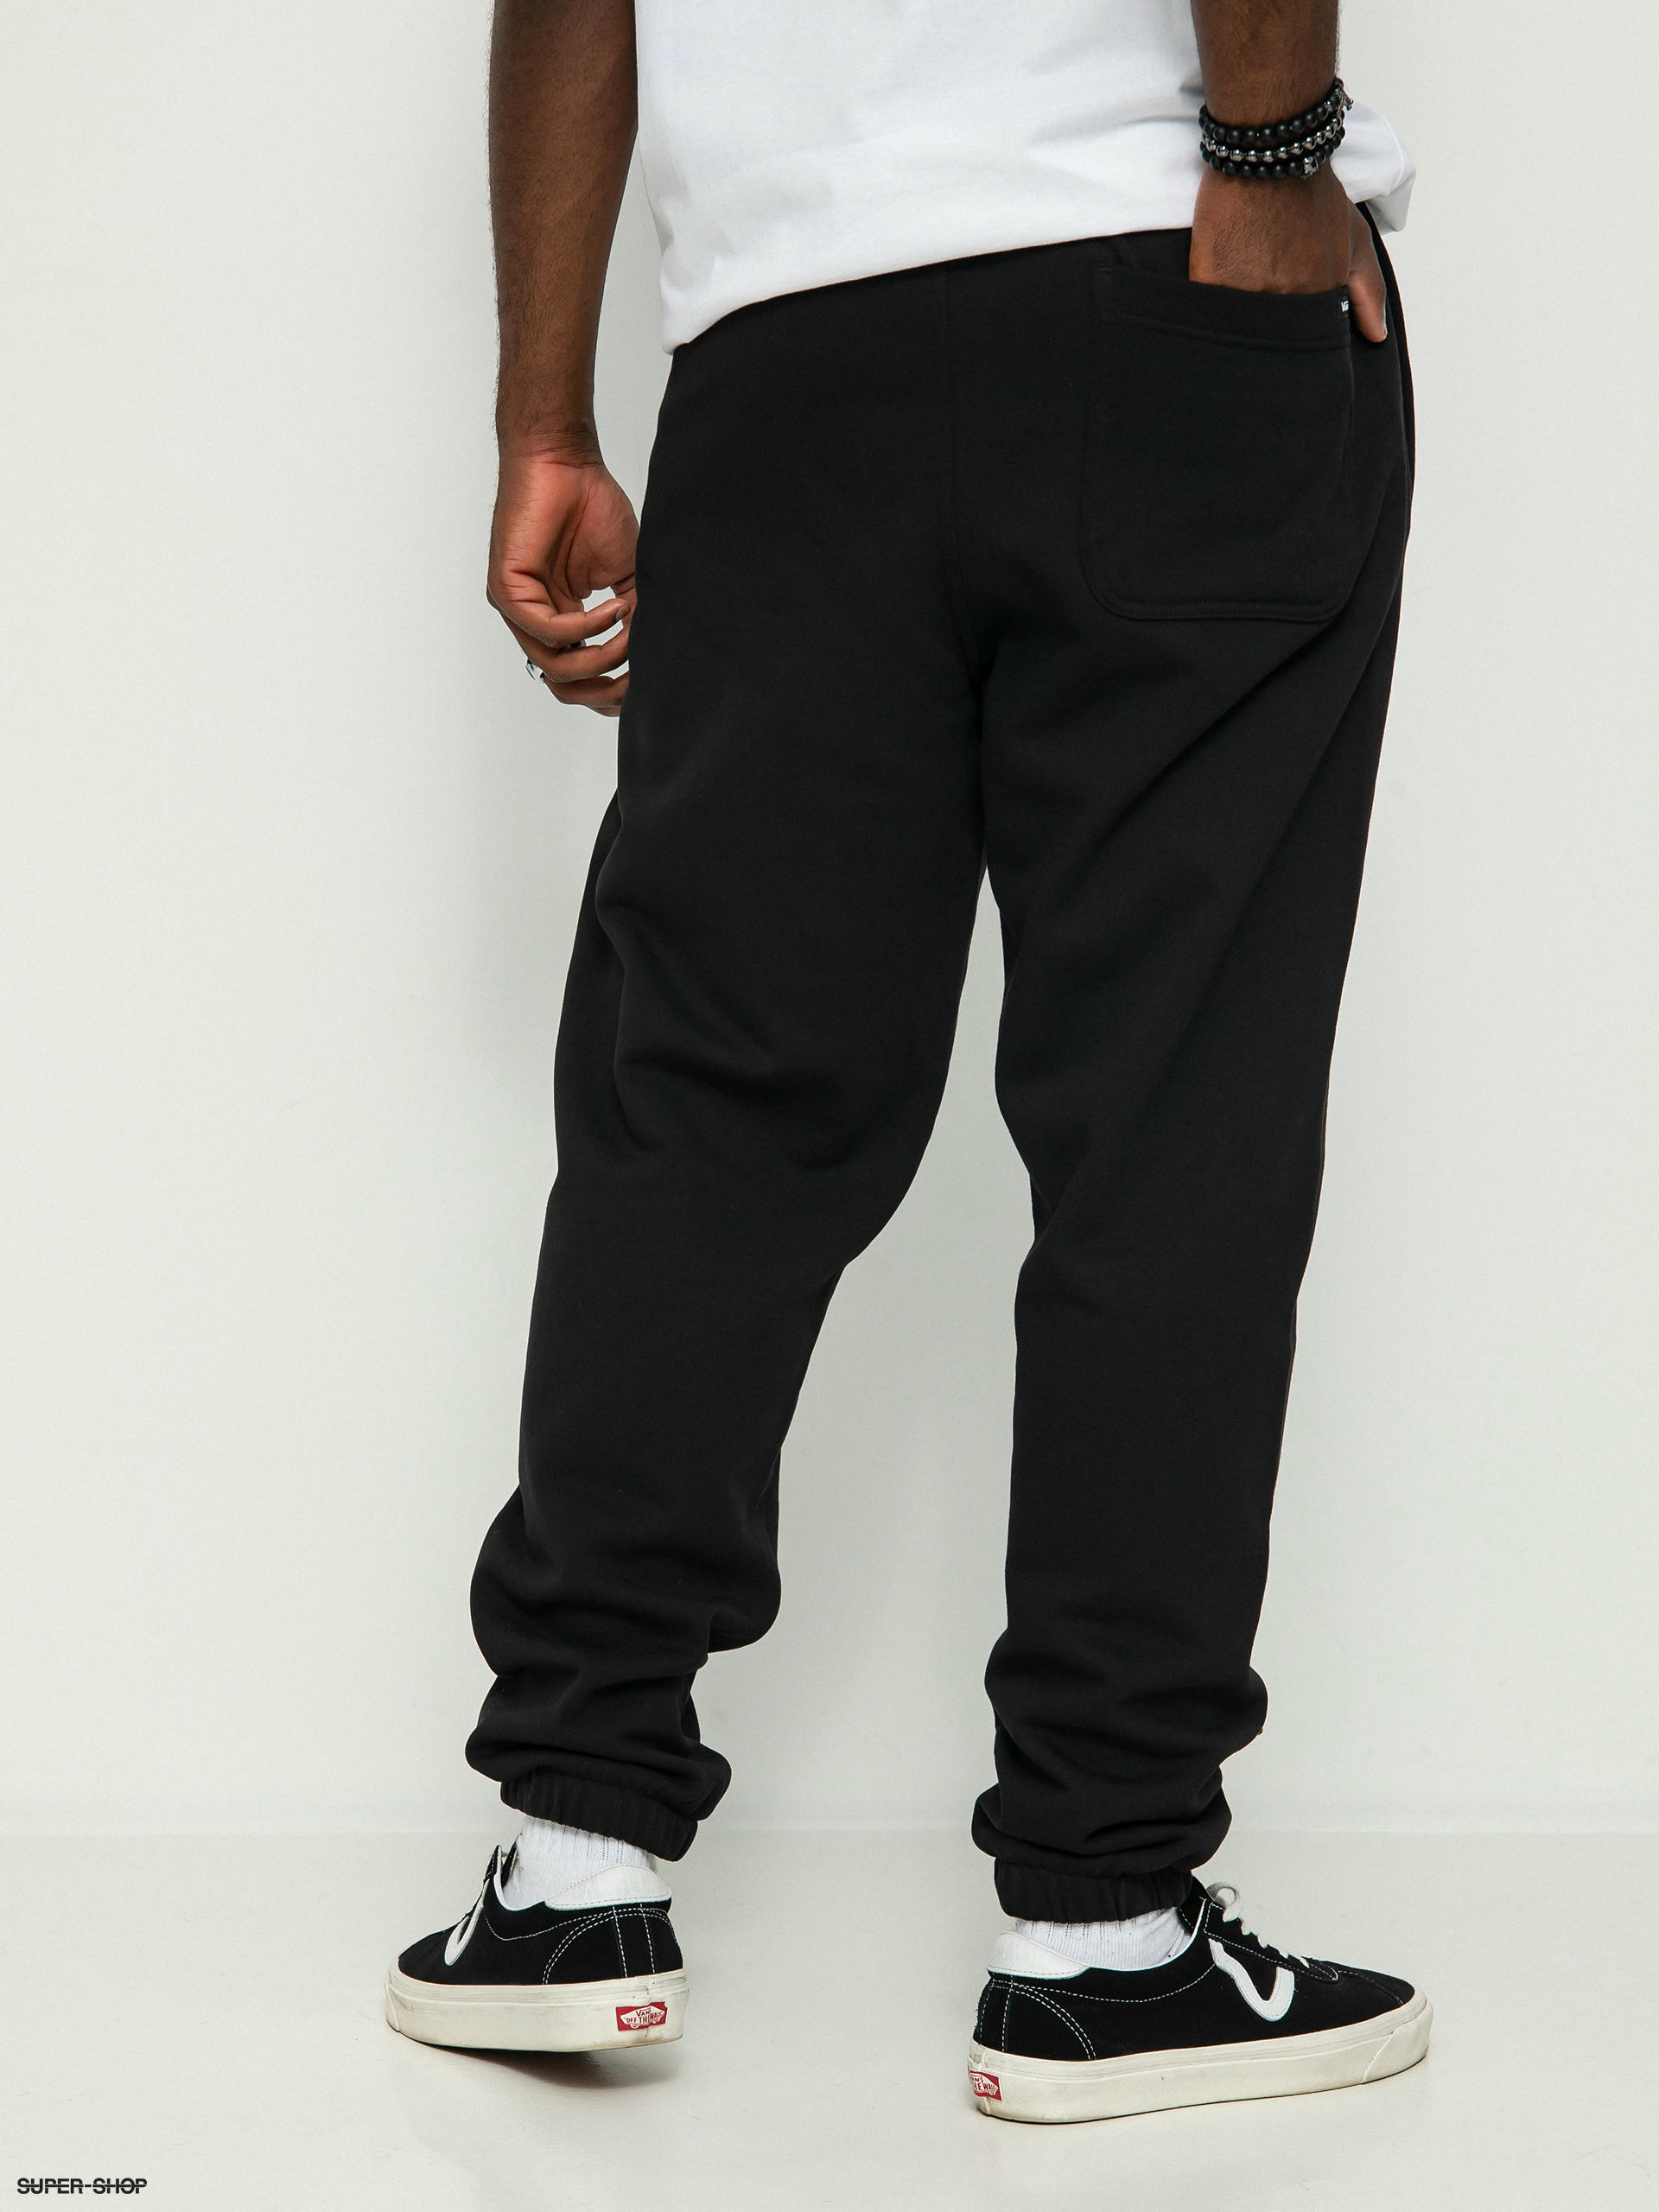 Vans Core Basic Fleece Pants (black)